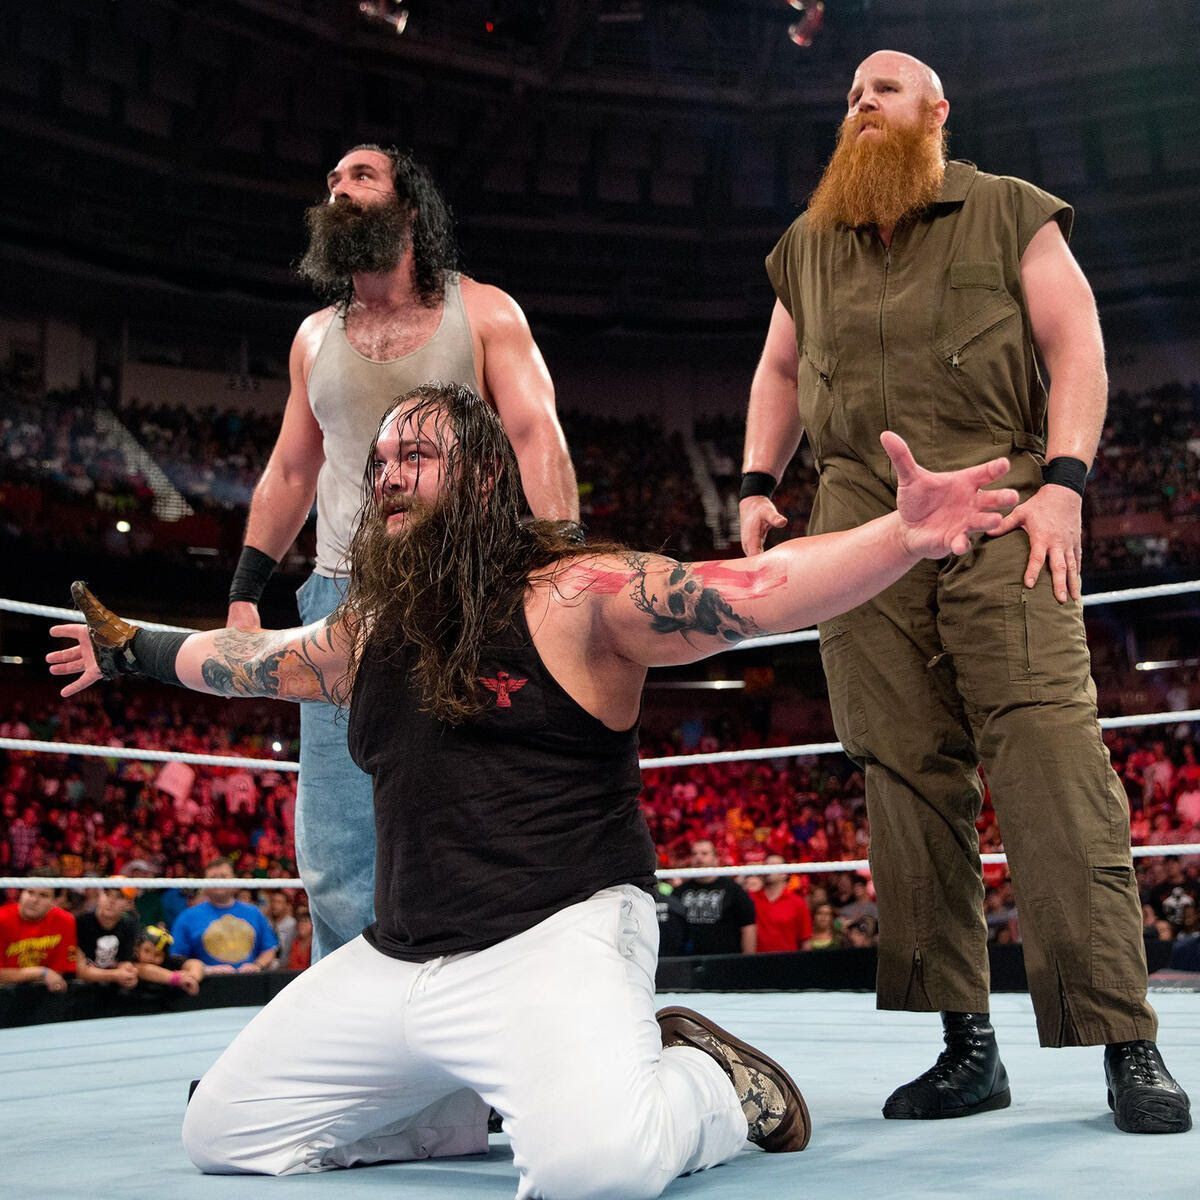 The Wyatt Family in the ring